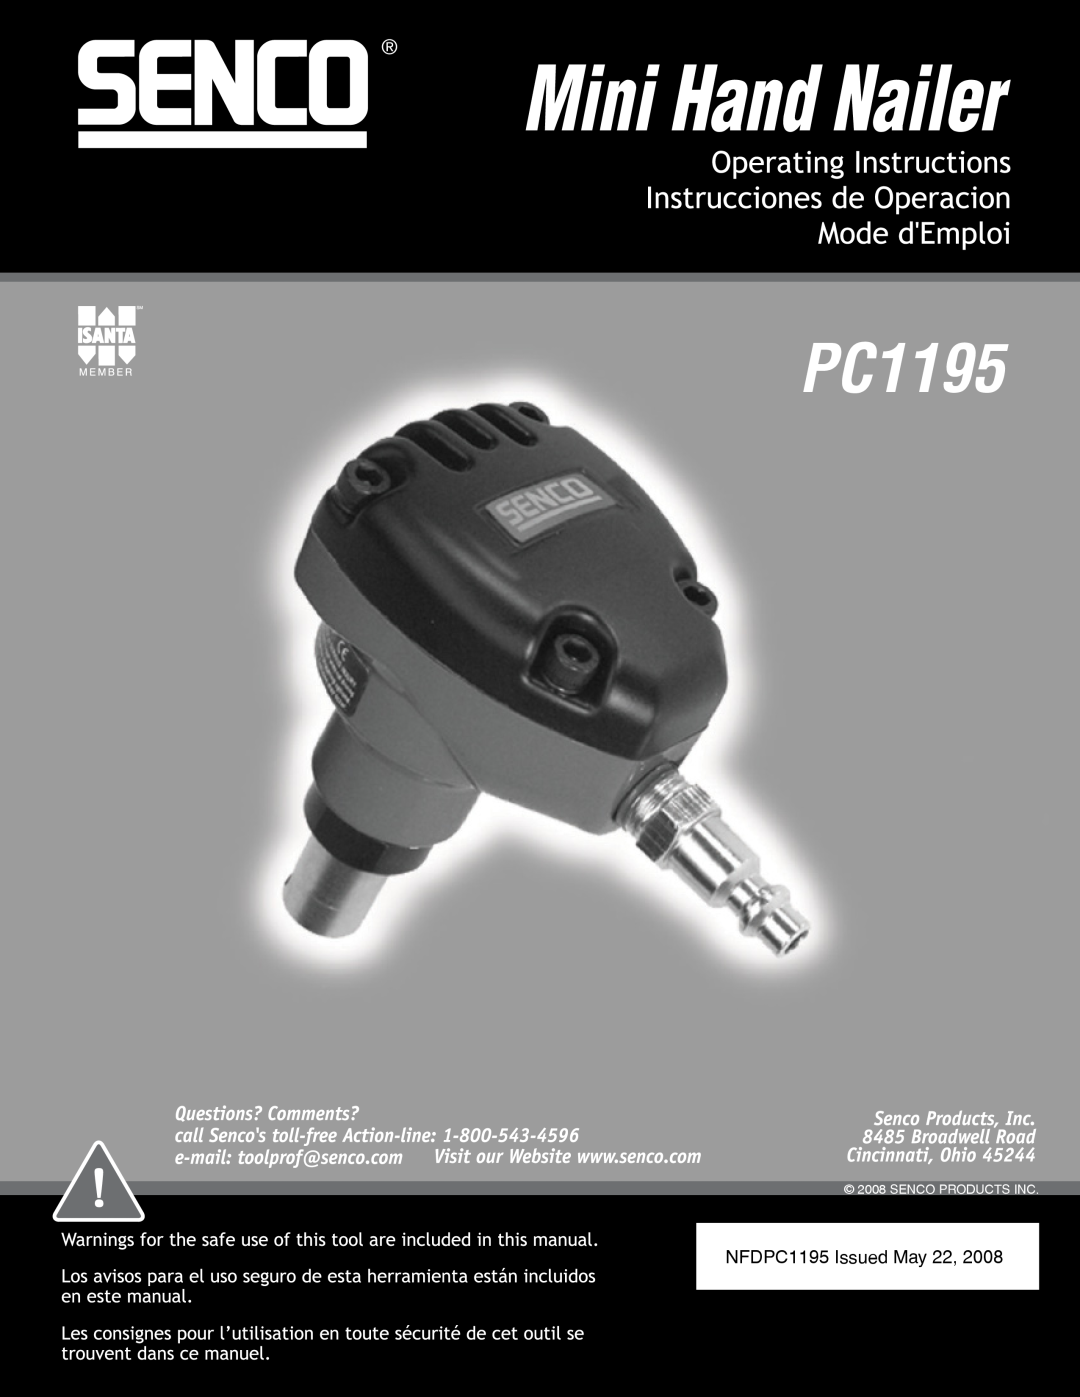 Senco manual Mini Hand Nailer, NFDPC1195 Issued May, Senco Products Inc 